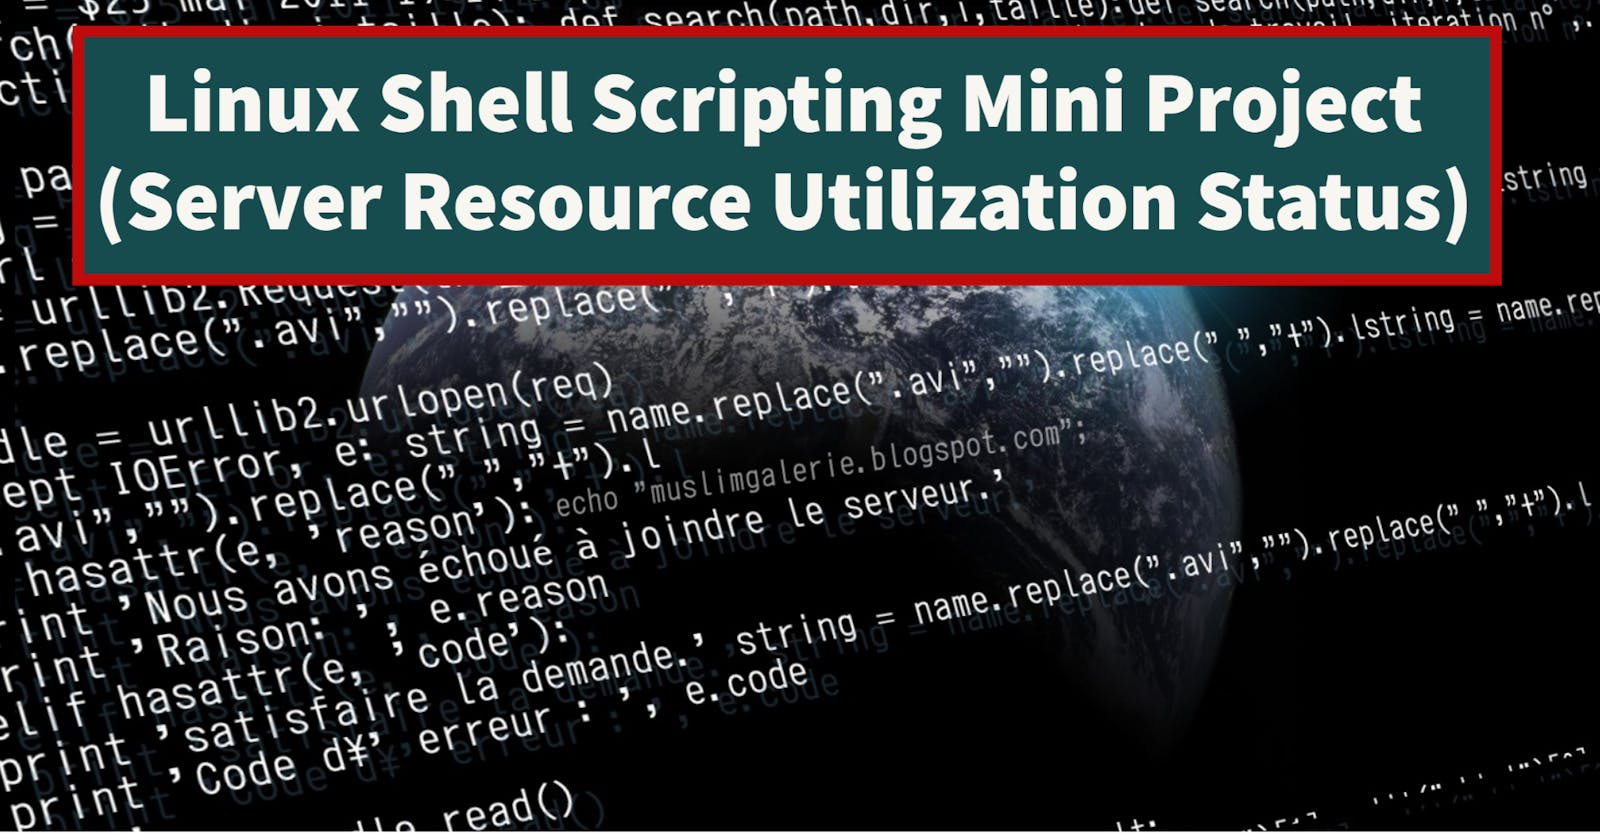 Linux Shell Scripting Mini Project(Server Resource Utilization Status)